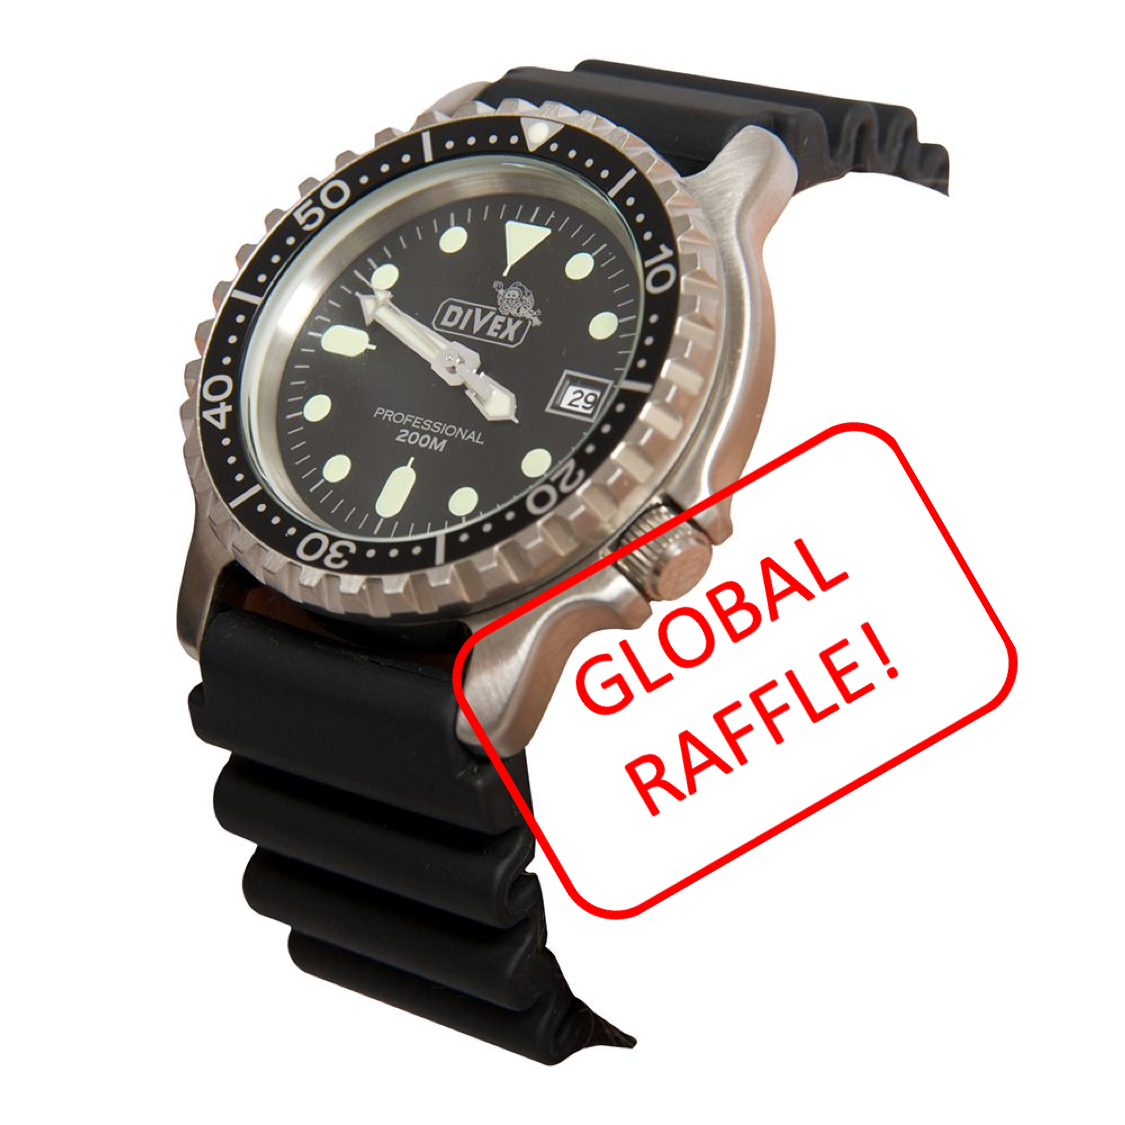 RAFFLE ITEM: Divex Professional 200 Watch